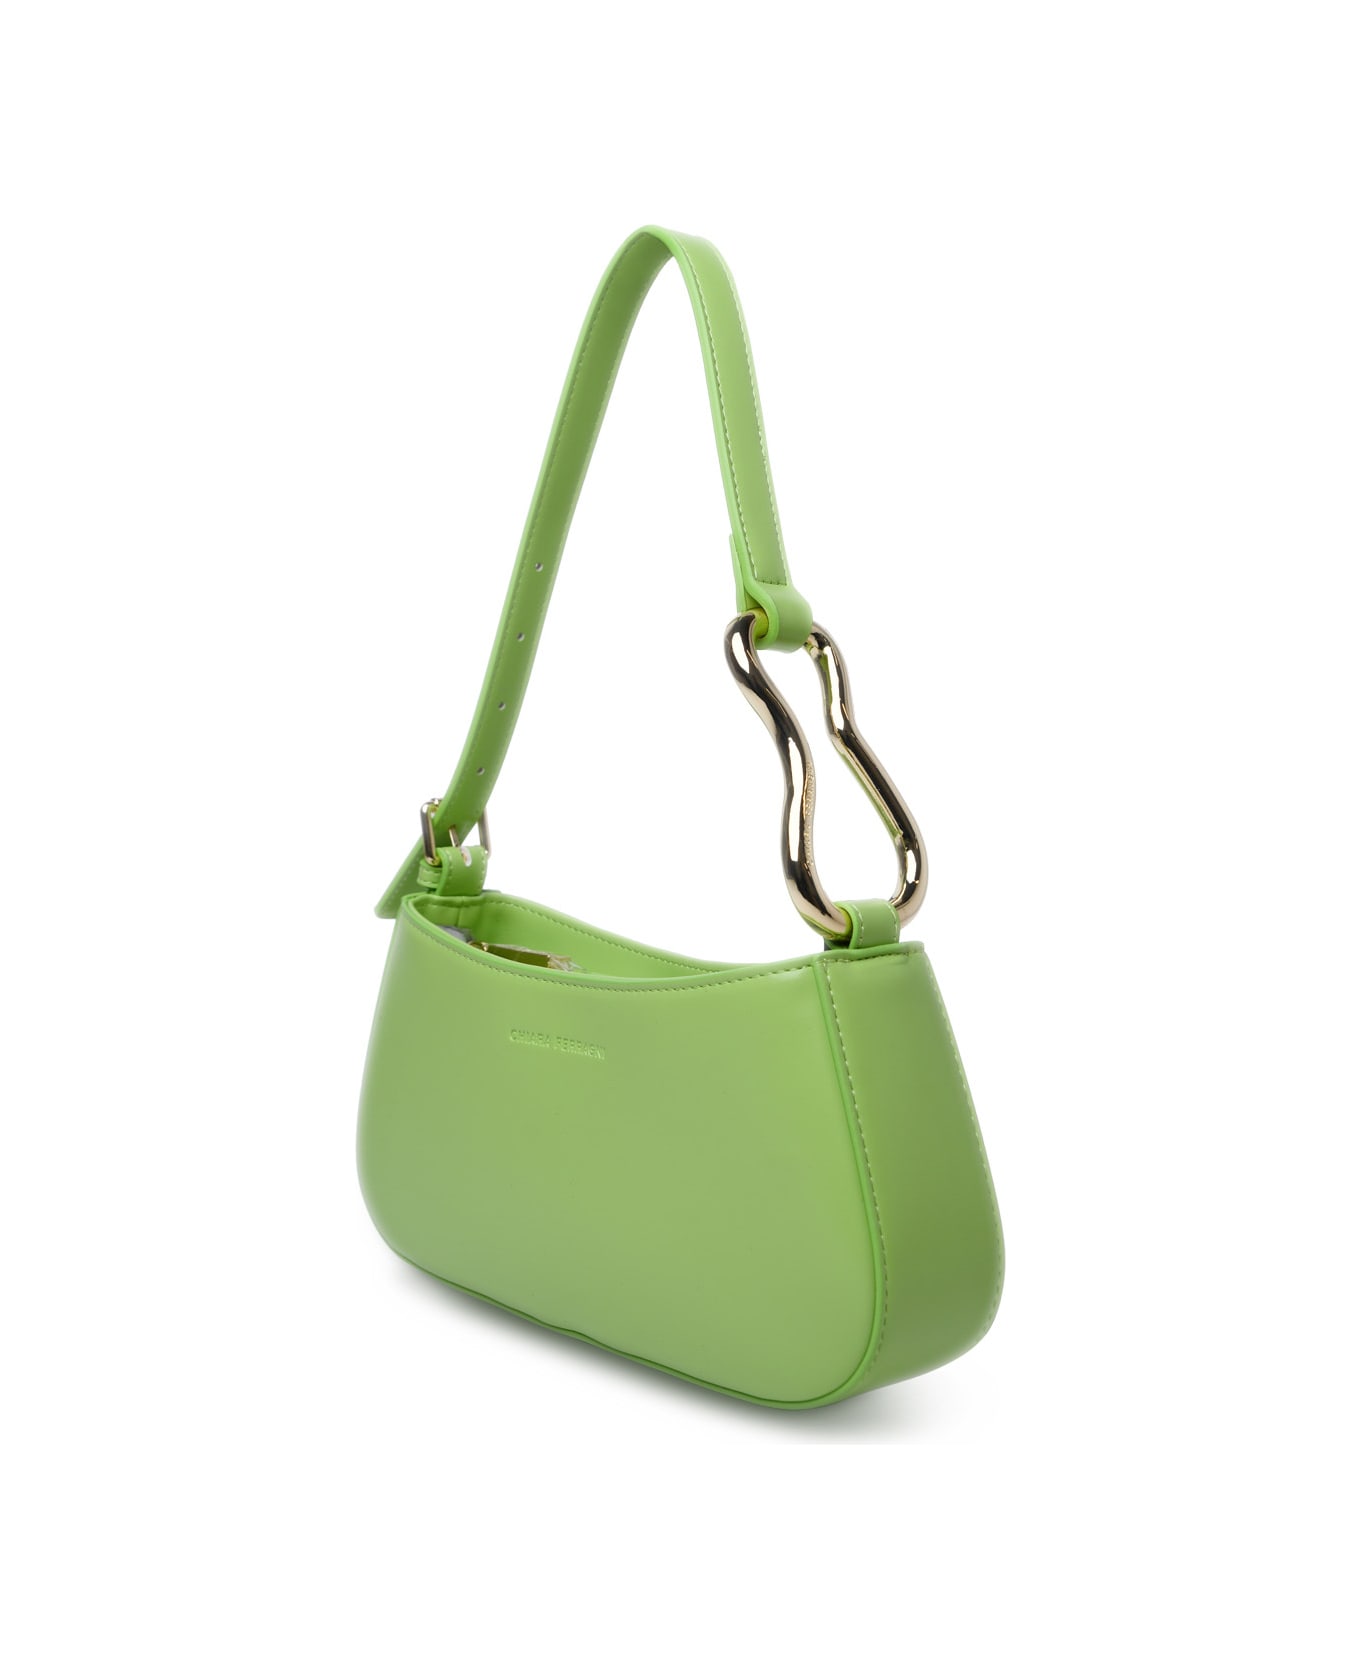 Chiara Ferragni 'cfloop' Green Polyester Bag Chiara Ferragni - GREEN